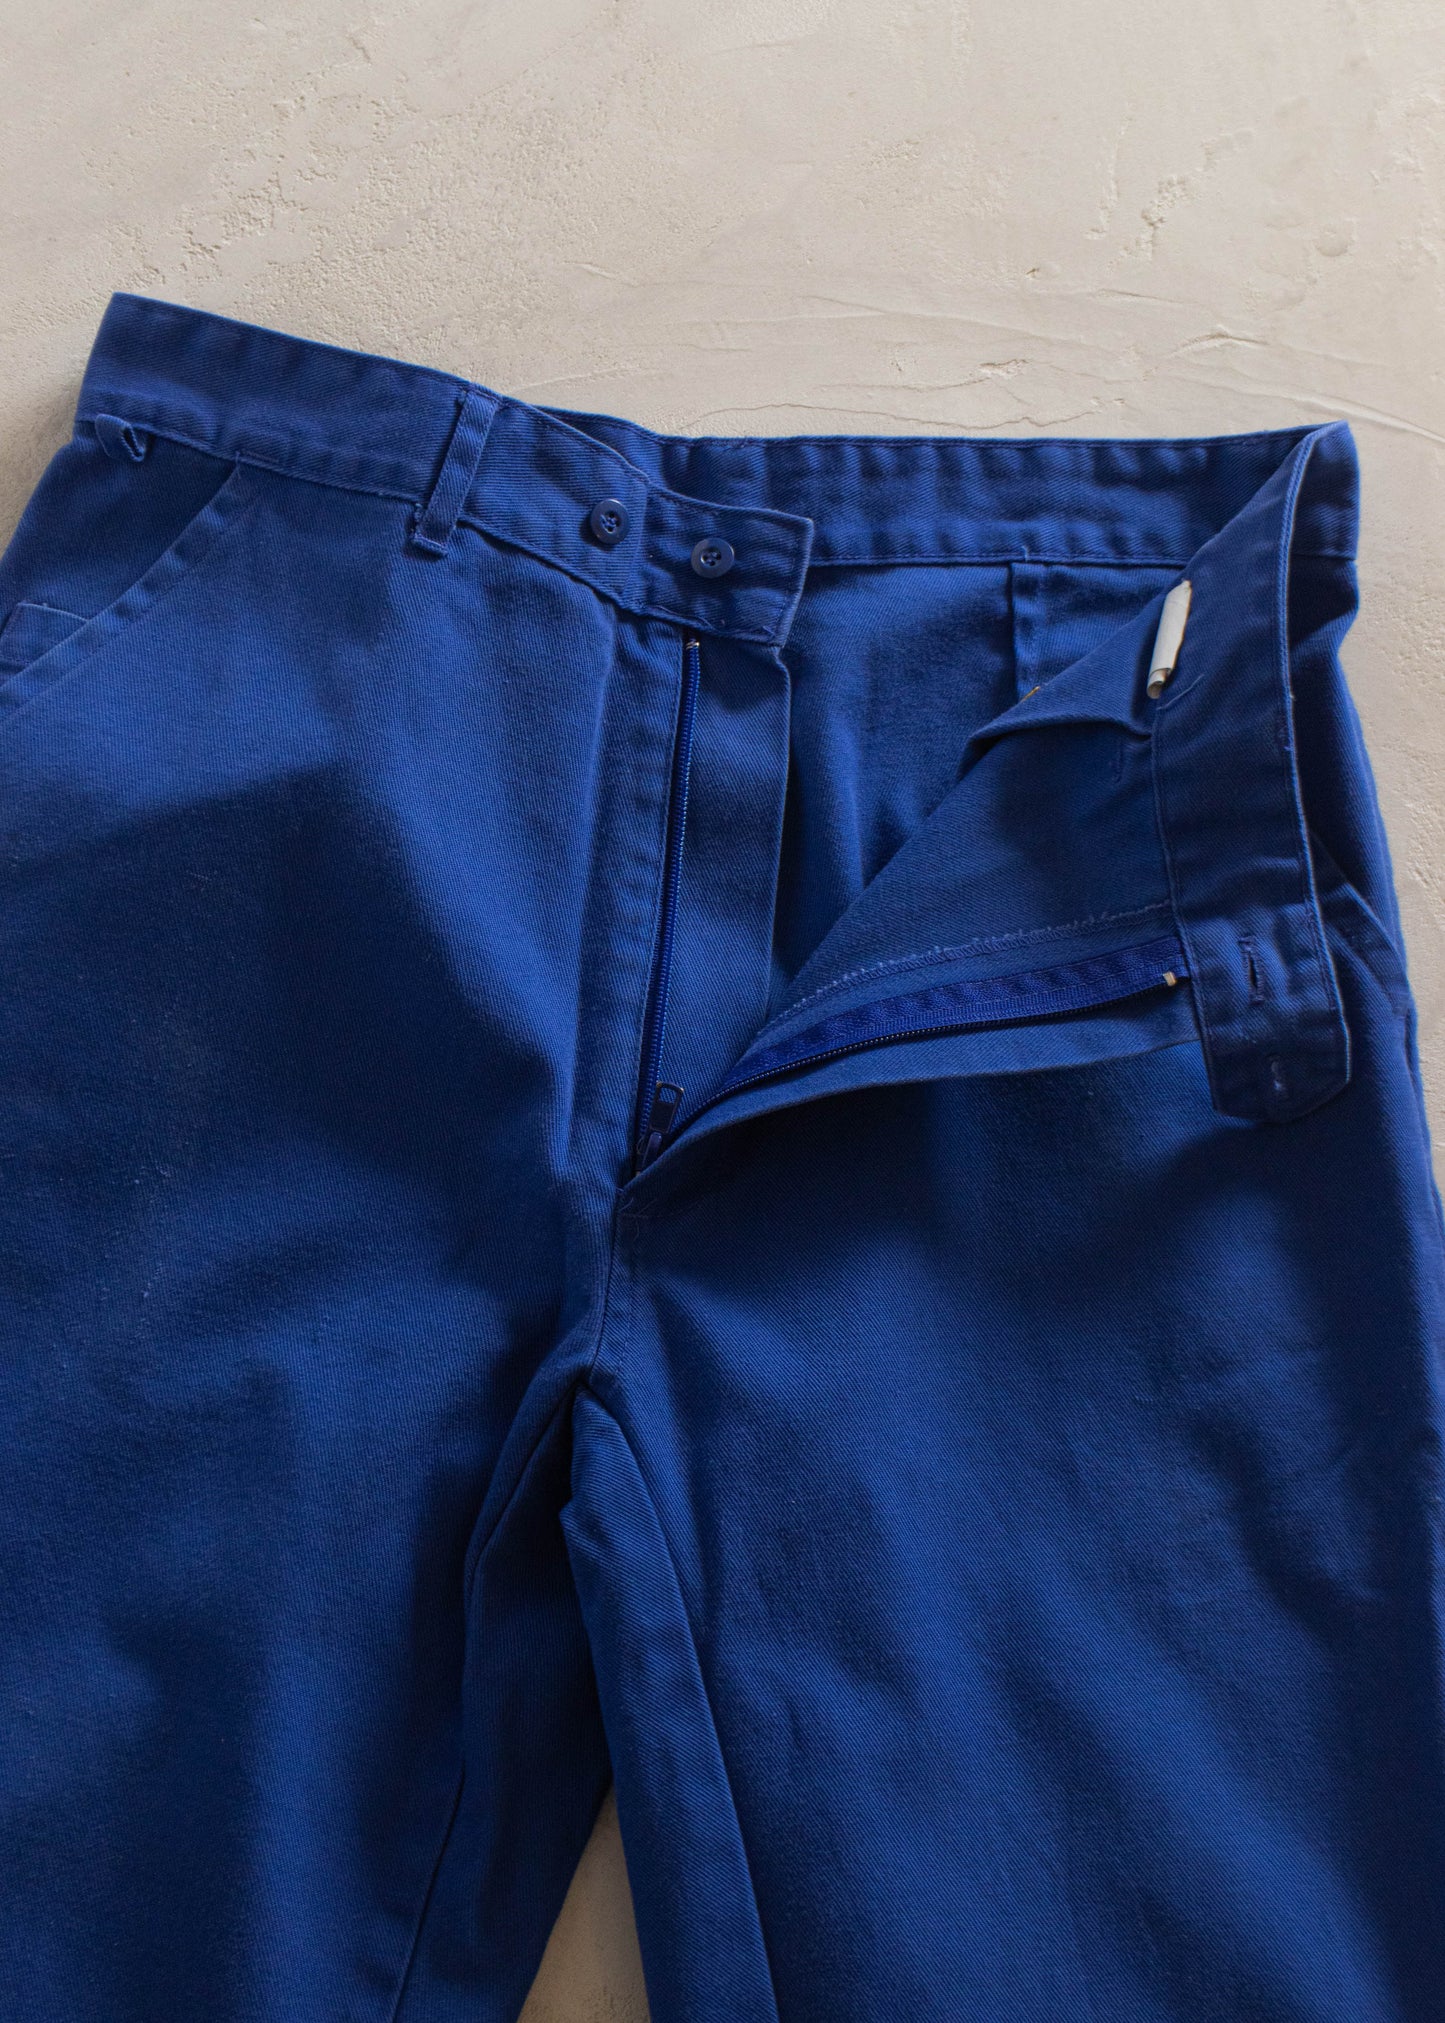 1980s Molinel French Workwear Chore Pants Size Women's 30 Men's 32